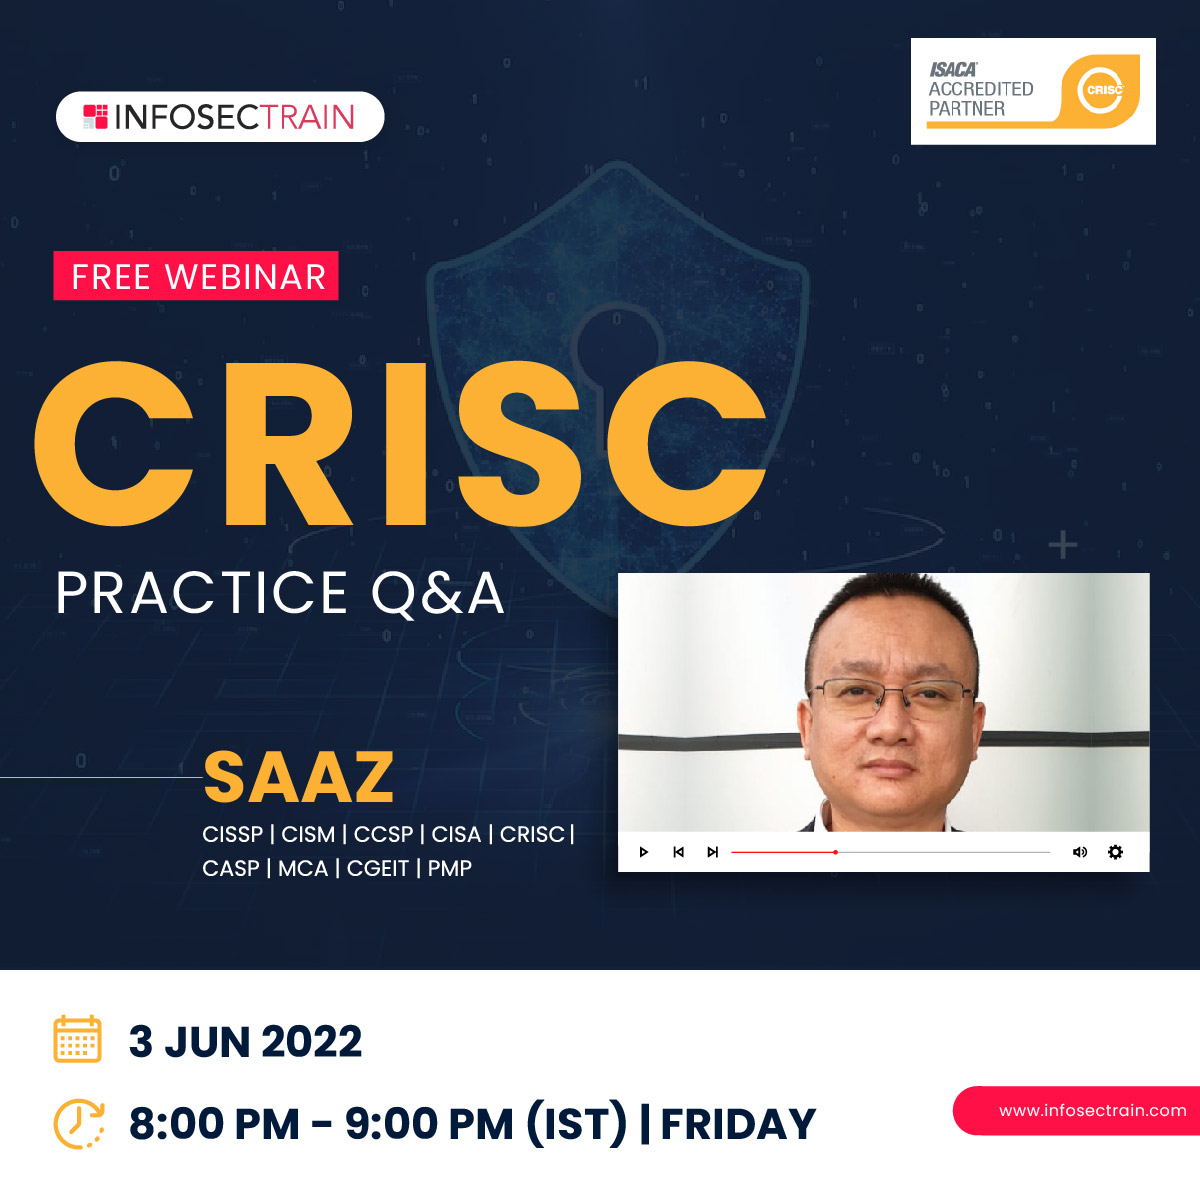 Free webinar on CRISC Practice Q&A with Saaz Rai, Online Event